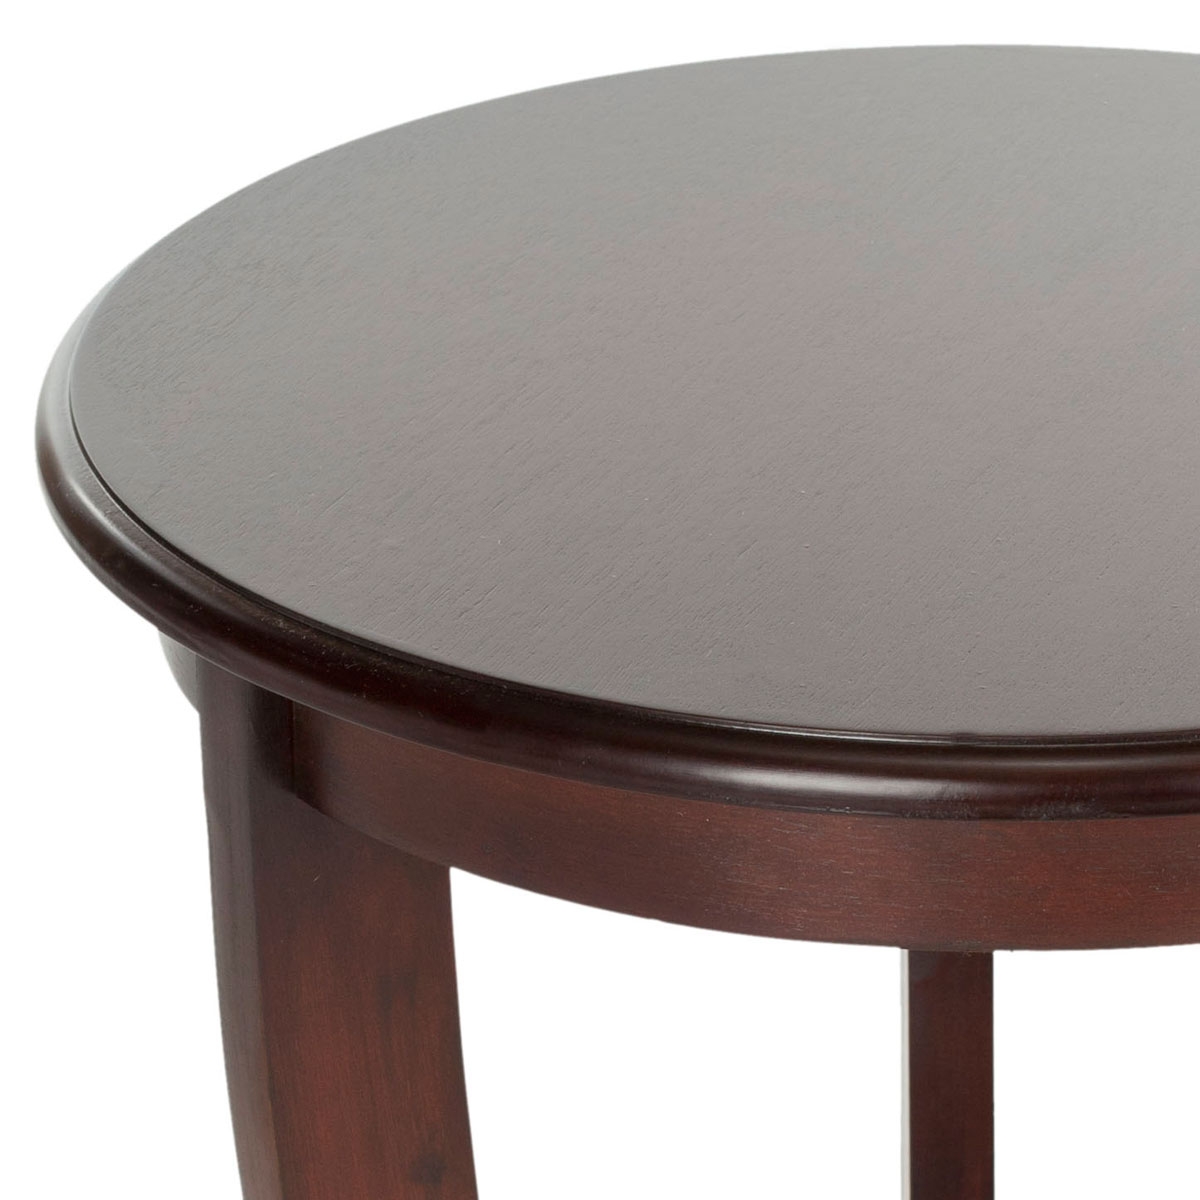 Mary Pedestal Side Table - Dark Cherry - Safavieh - Image 1